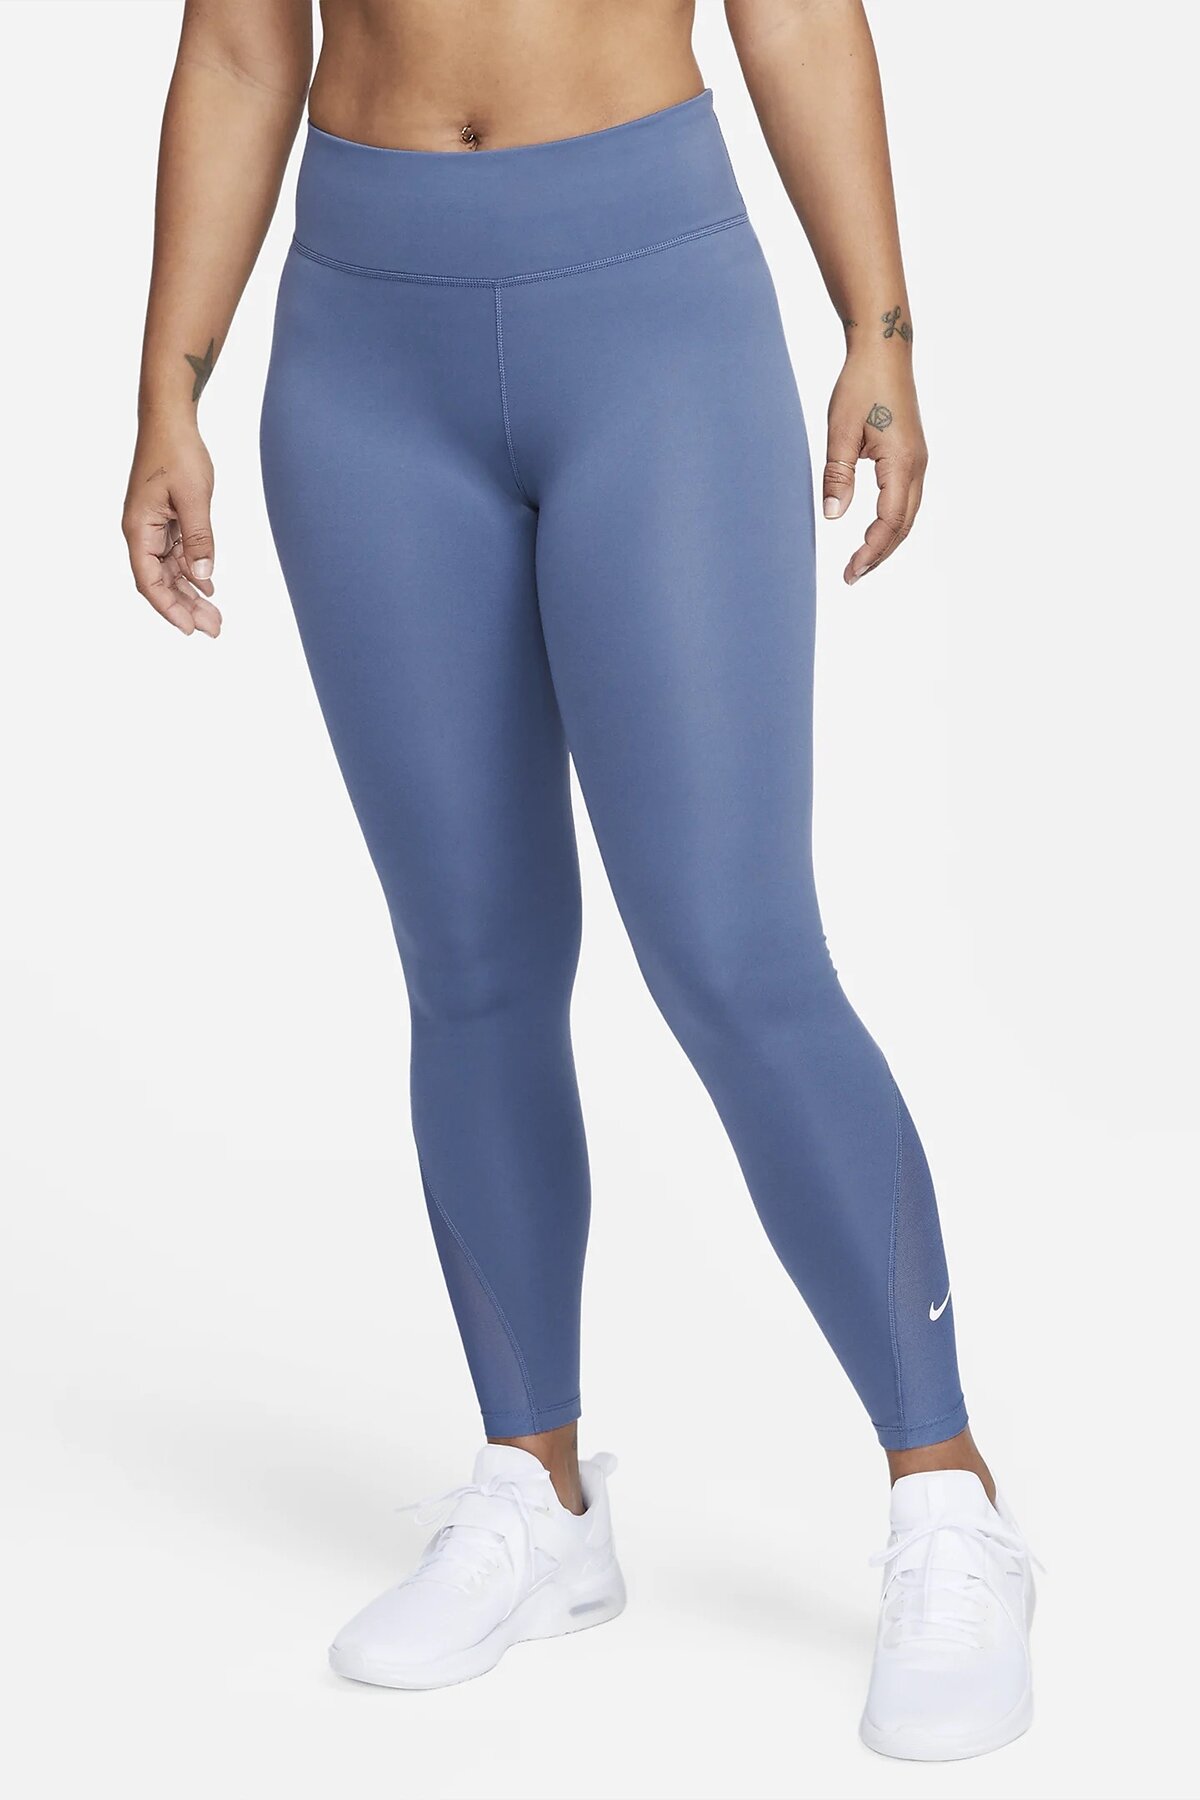 Mavi Nike Kadın Tayt, Shopointcy